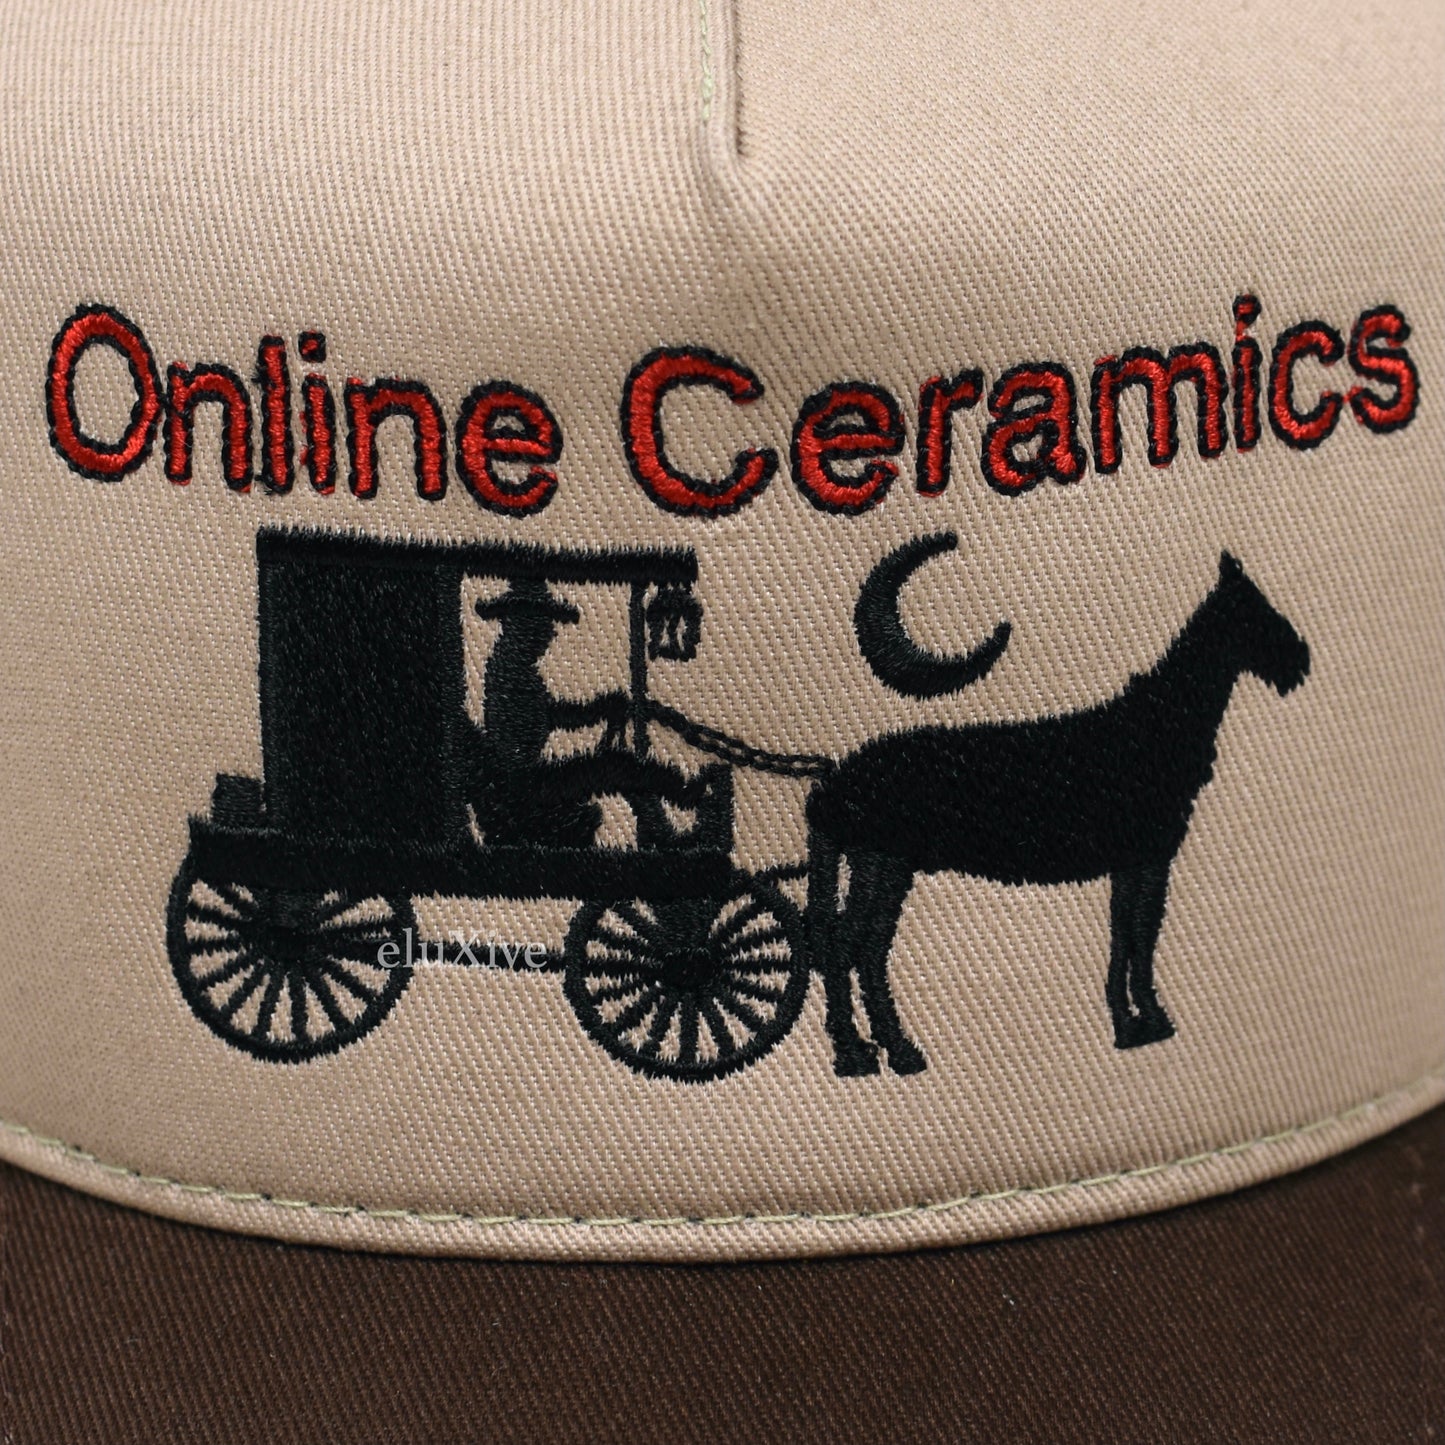 Online Ceramics - Carriage Logo 'Cowpoke' Trucker Hat (Brown)